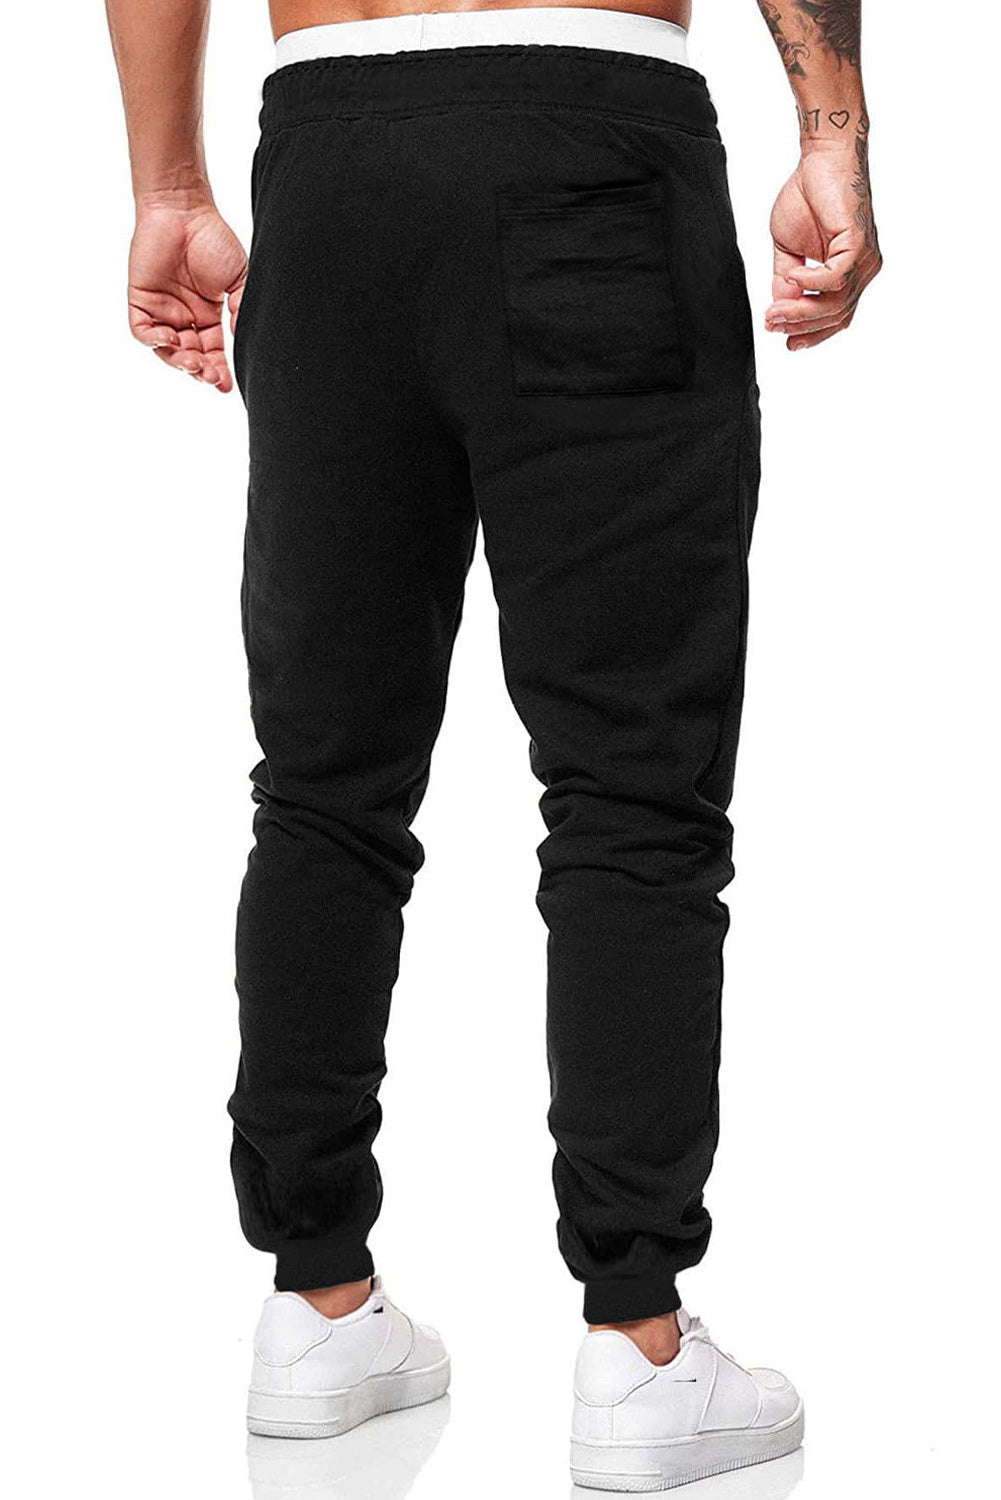 Black American Flag Reindeer Print Drawstring Men's Sweatpants Men's Pants JT's Designer Fashion